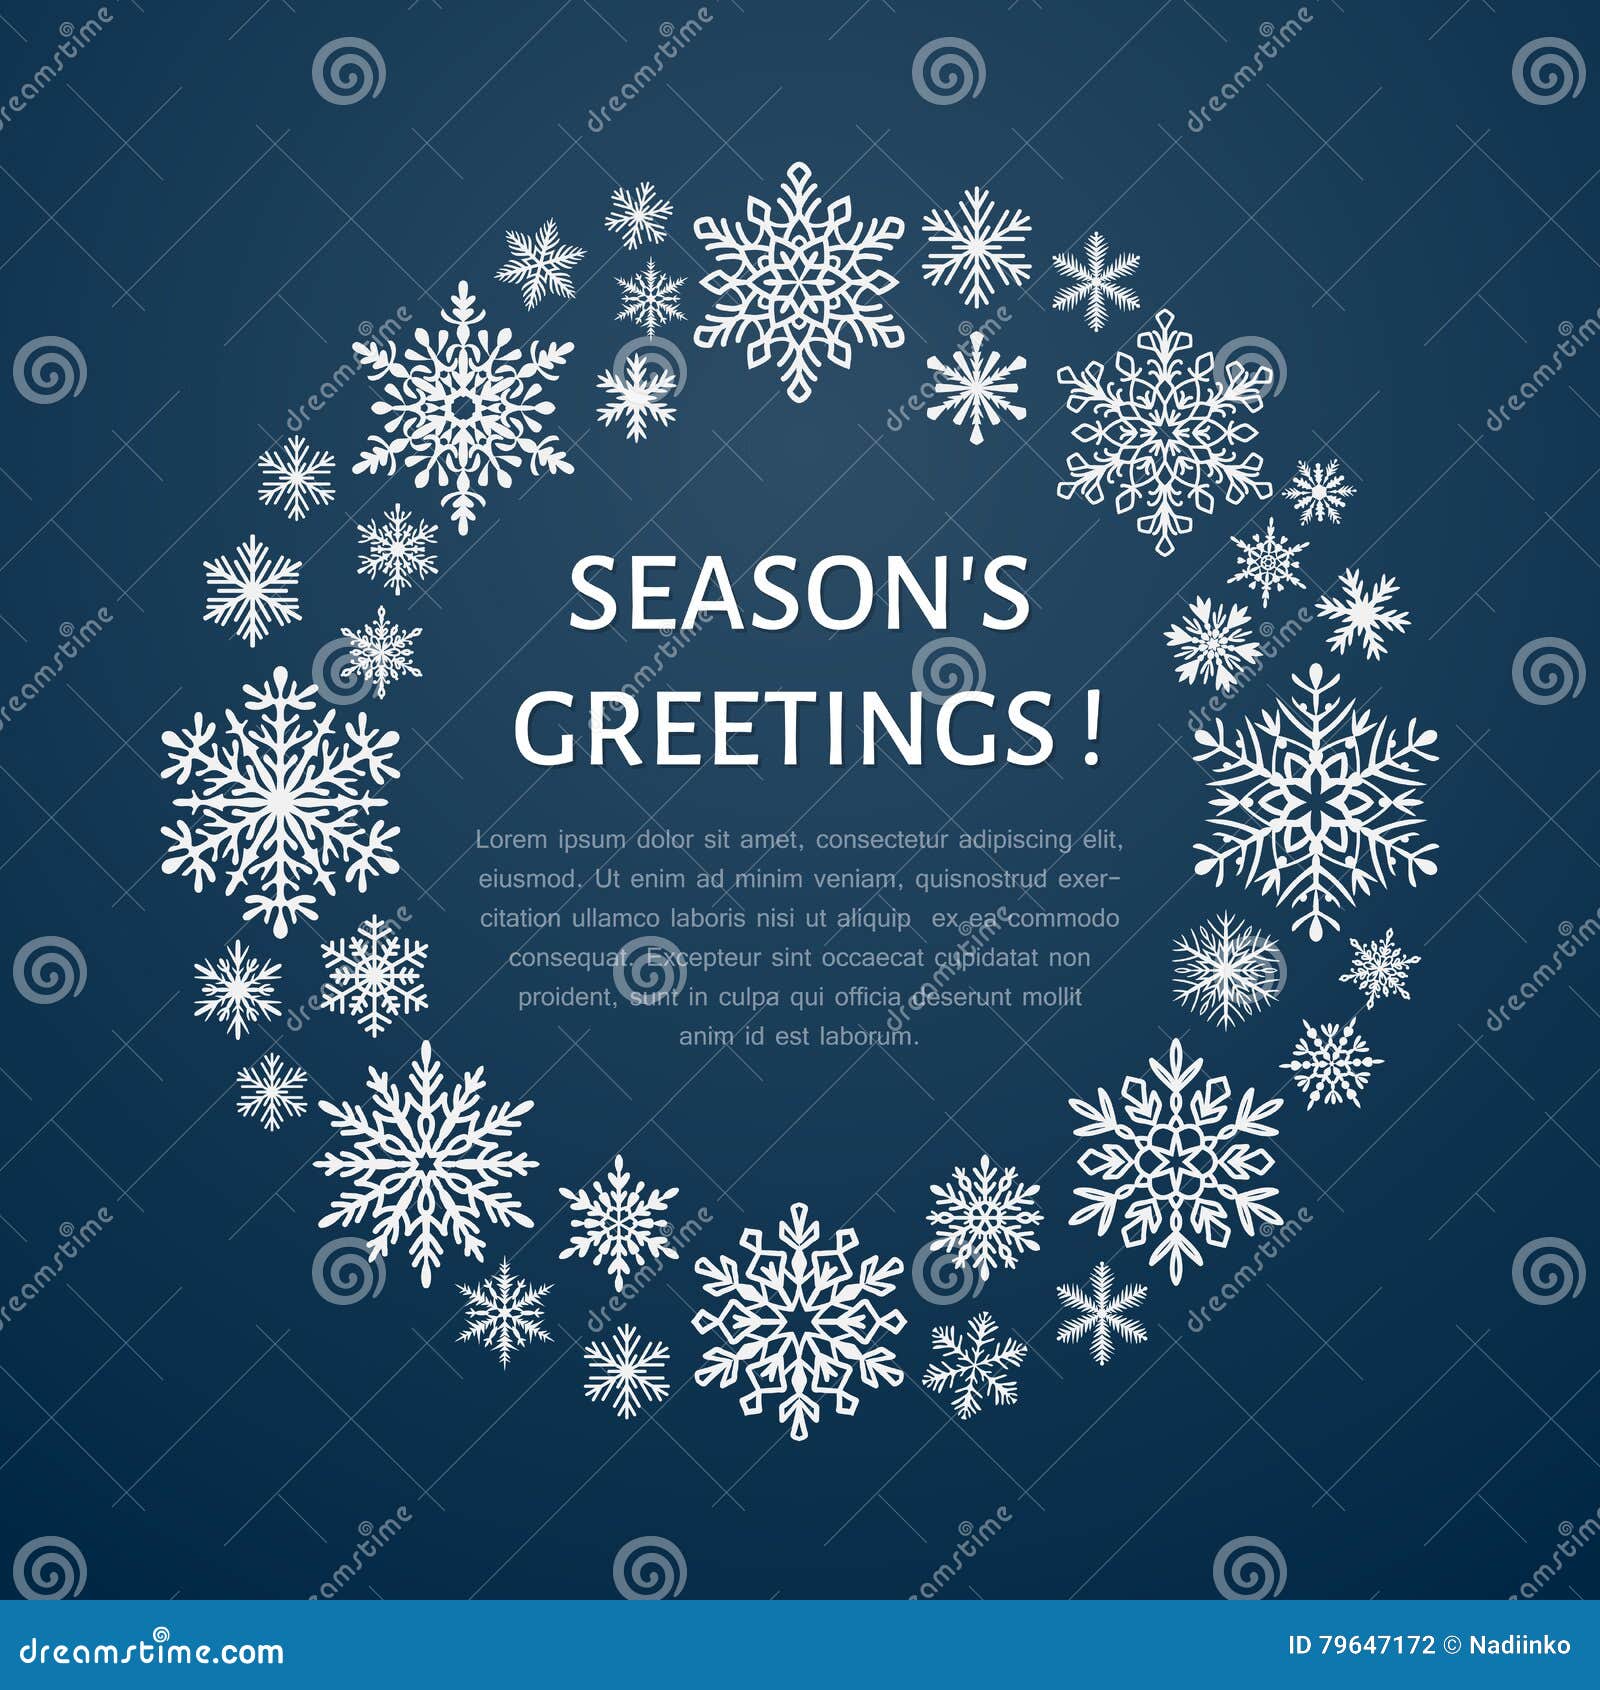 cute snowflake poster, banner. seasons greetings. flat snow icons, snowfall. nice snowflakes christmas template, cards. new year